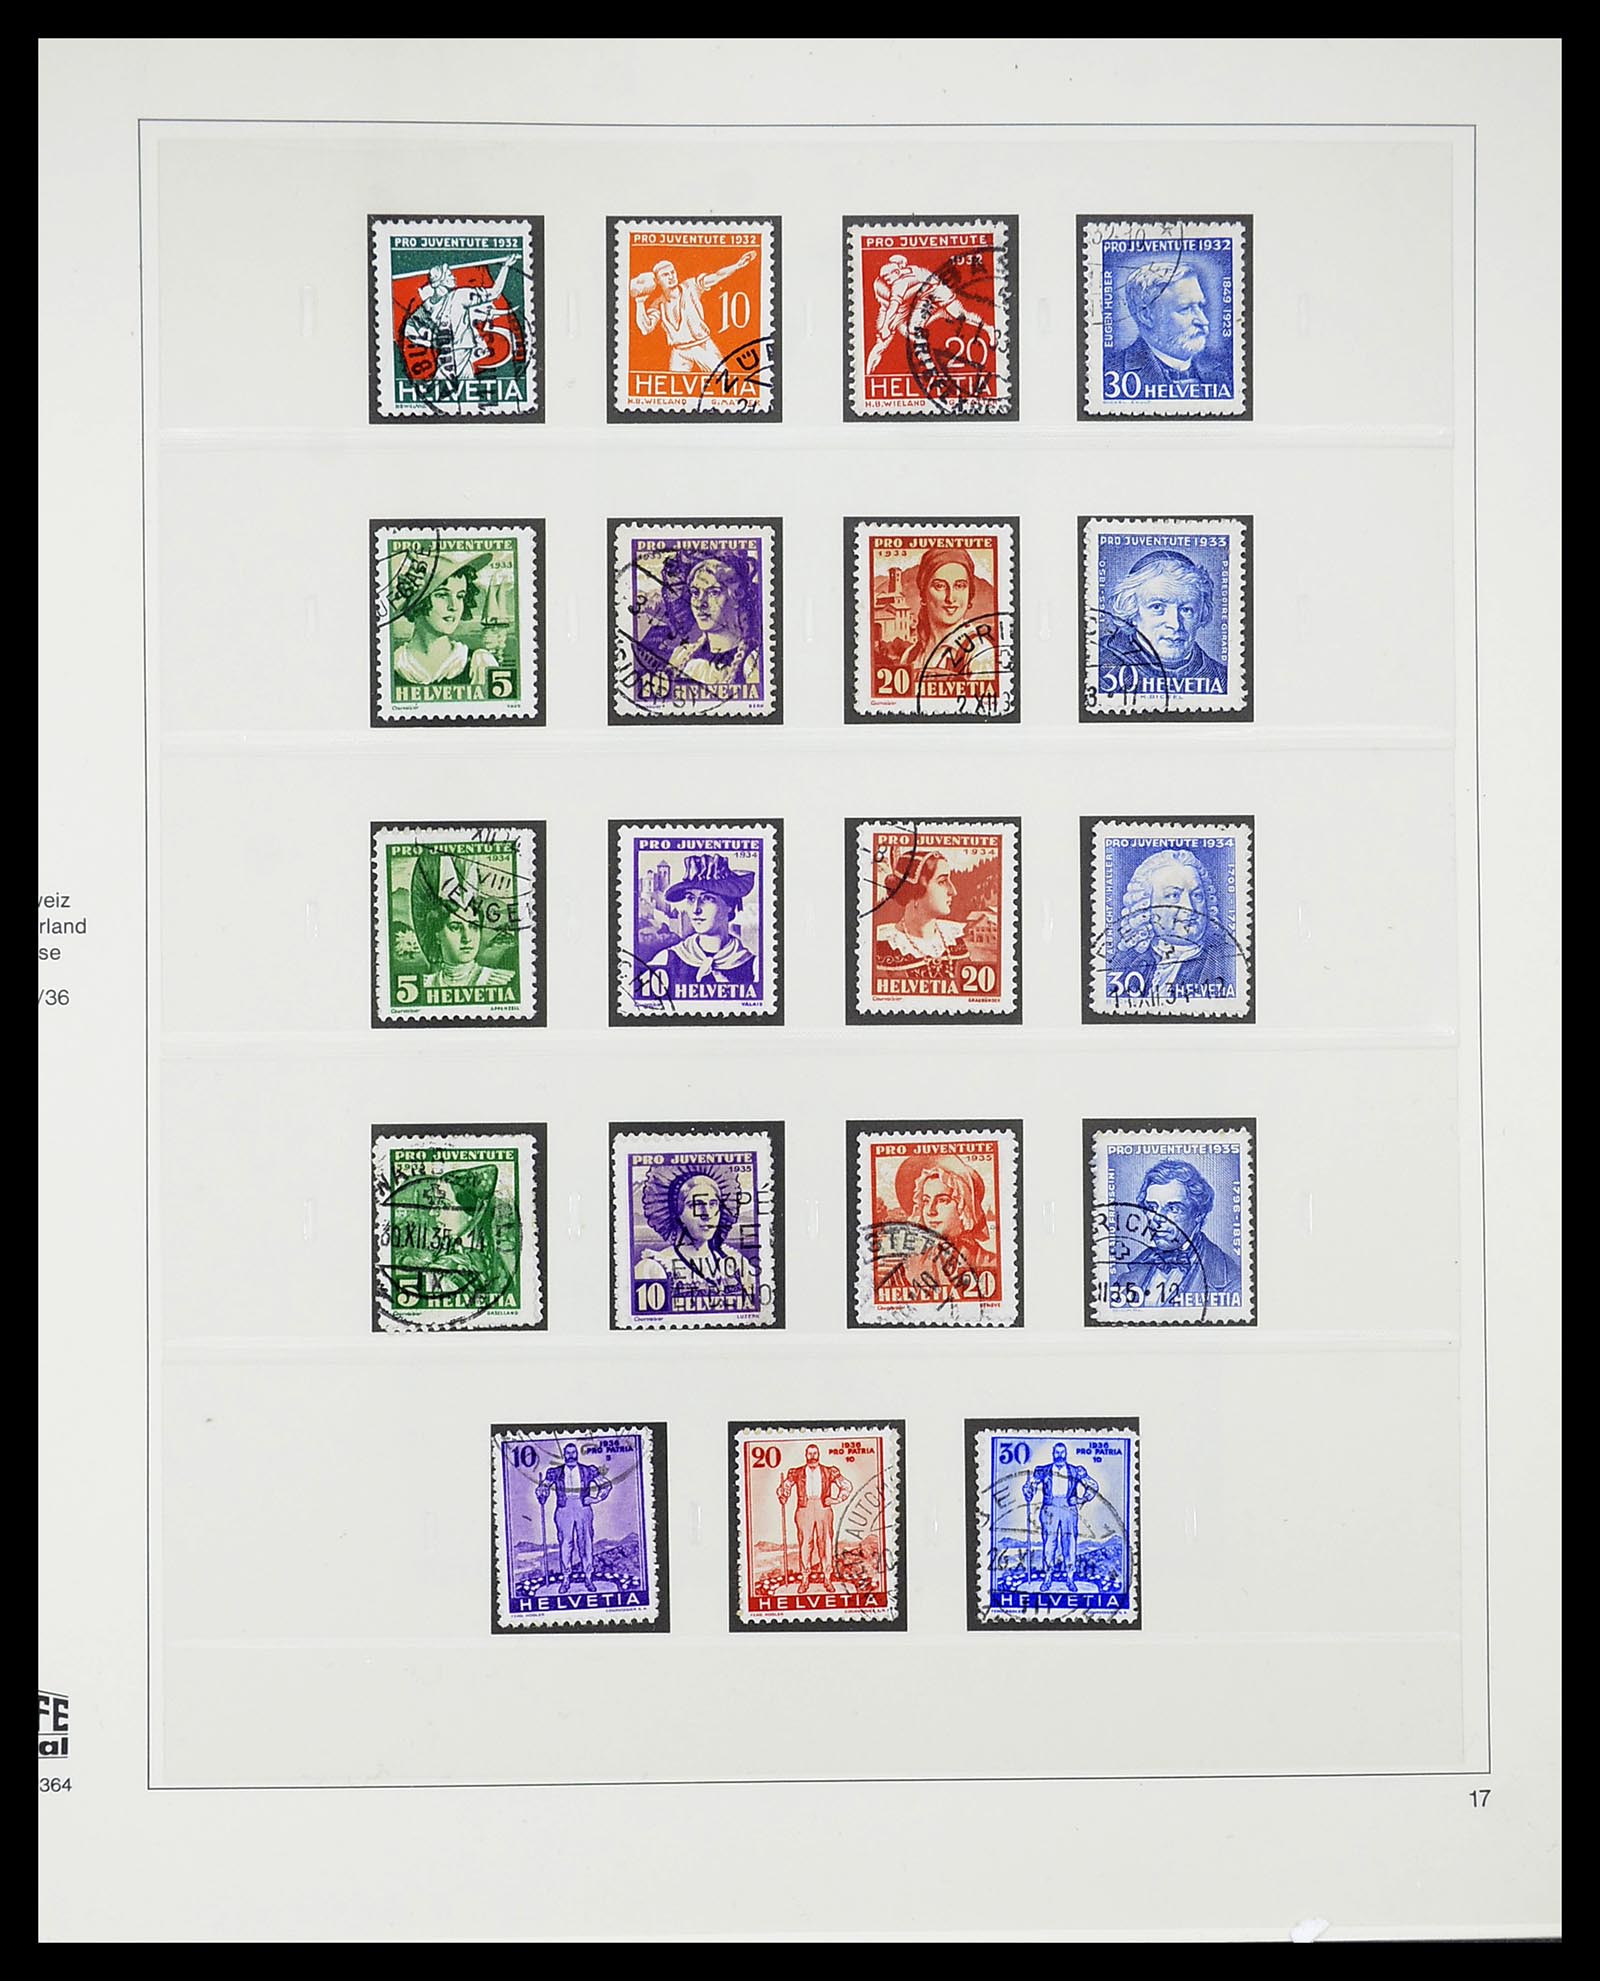 34645 028 - Stamp Collection 34645 Switzerland 1854-2007.